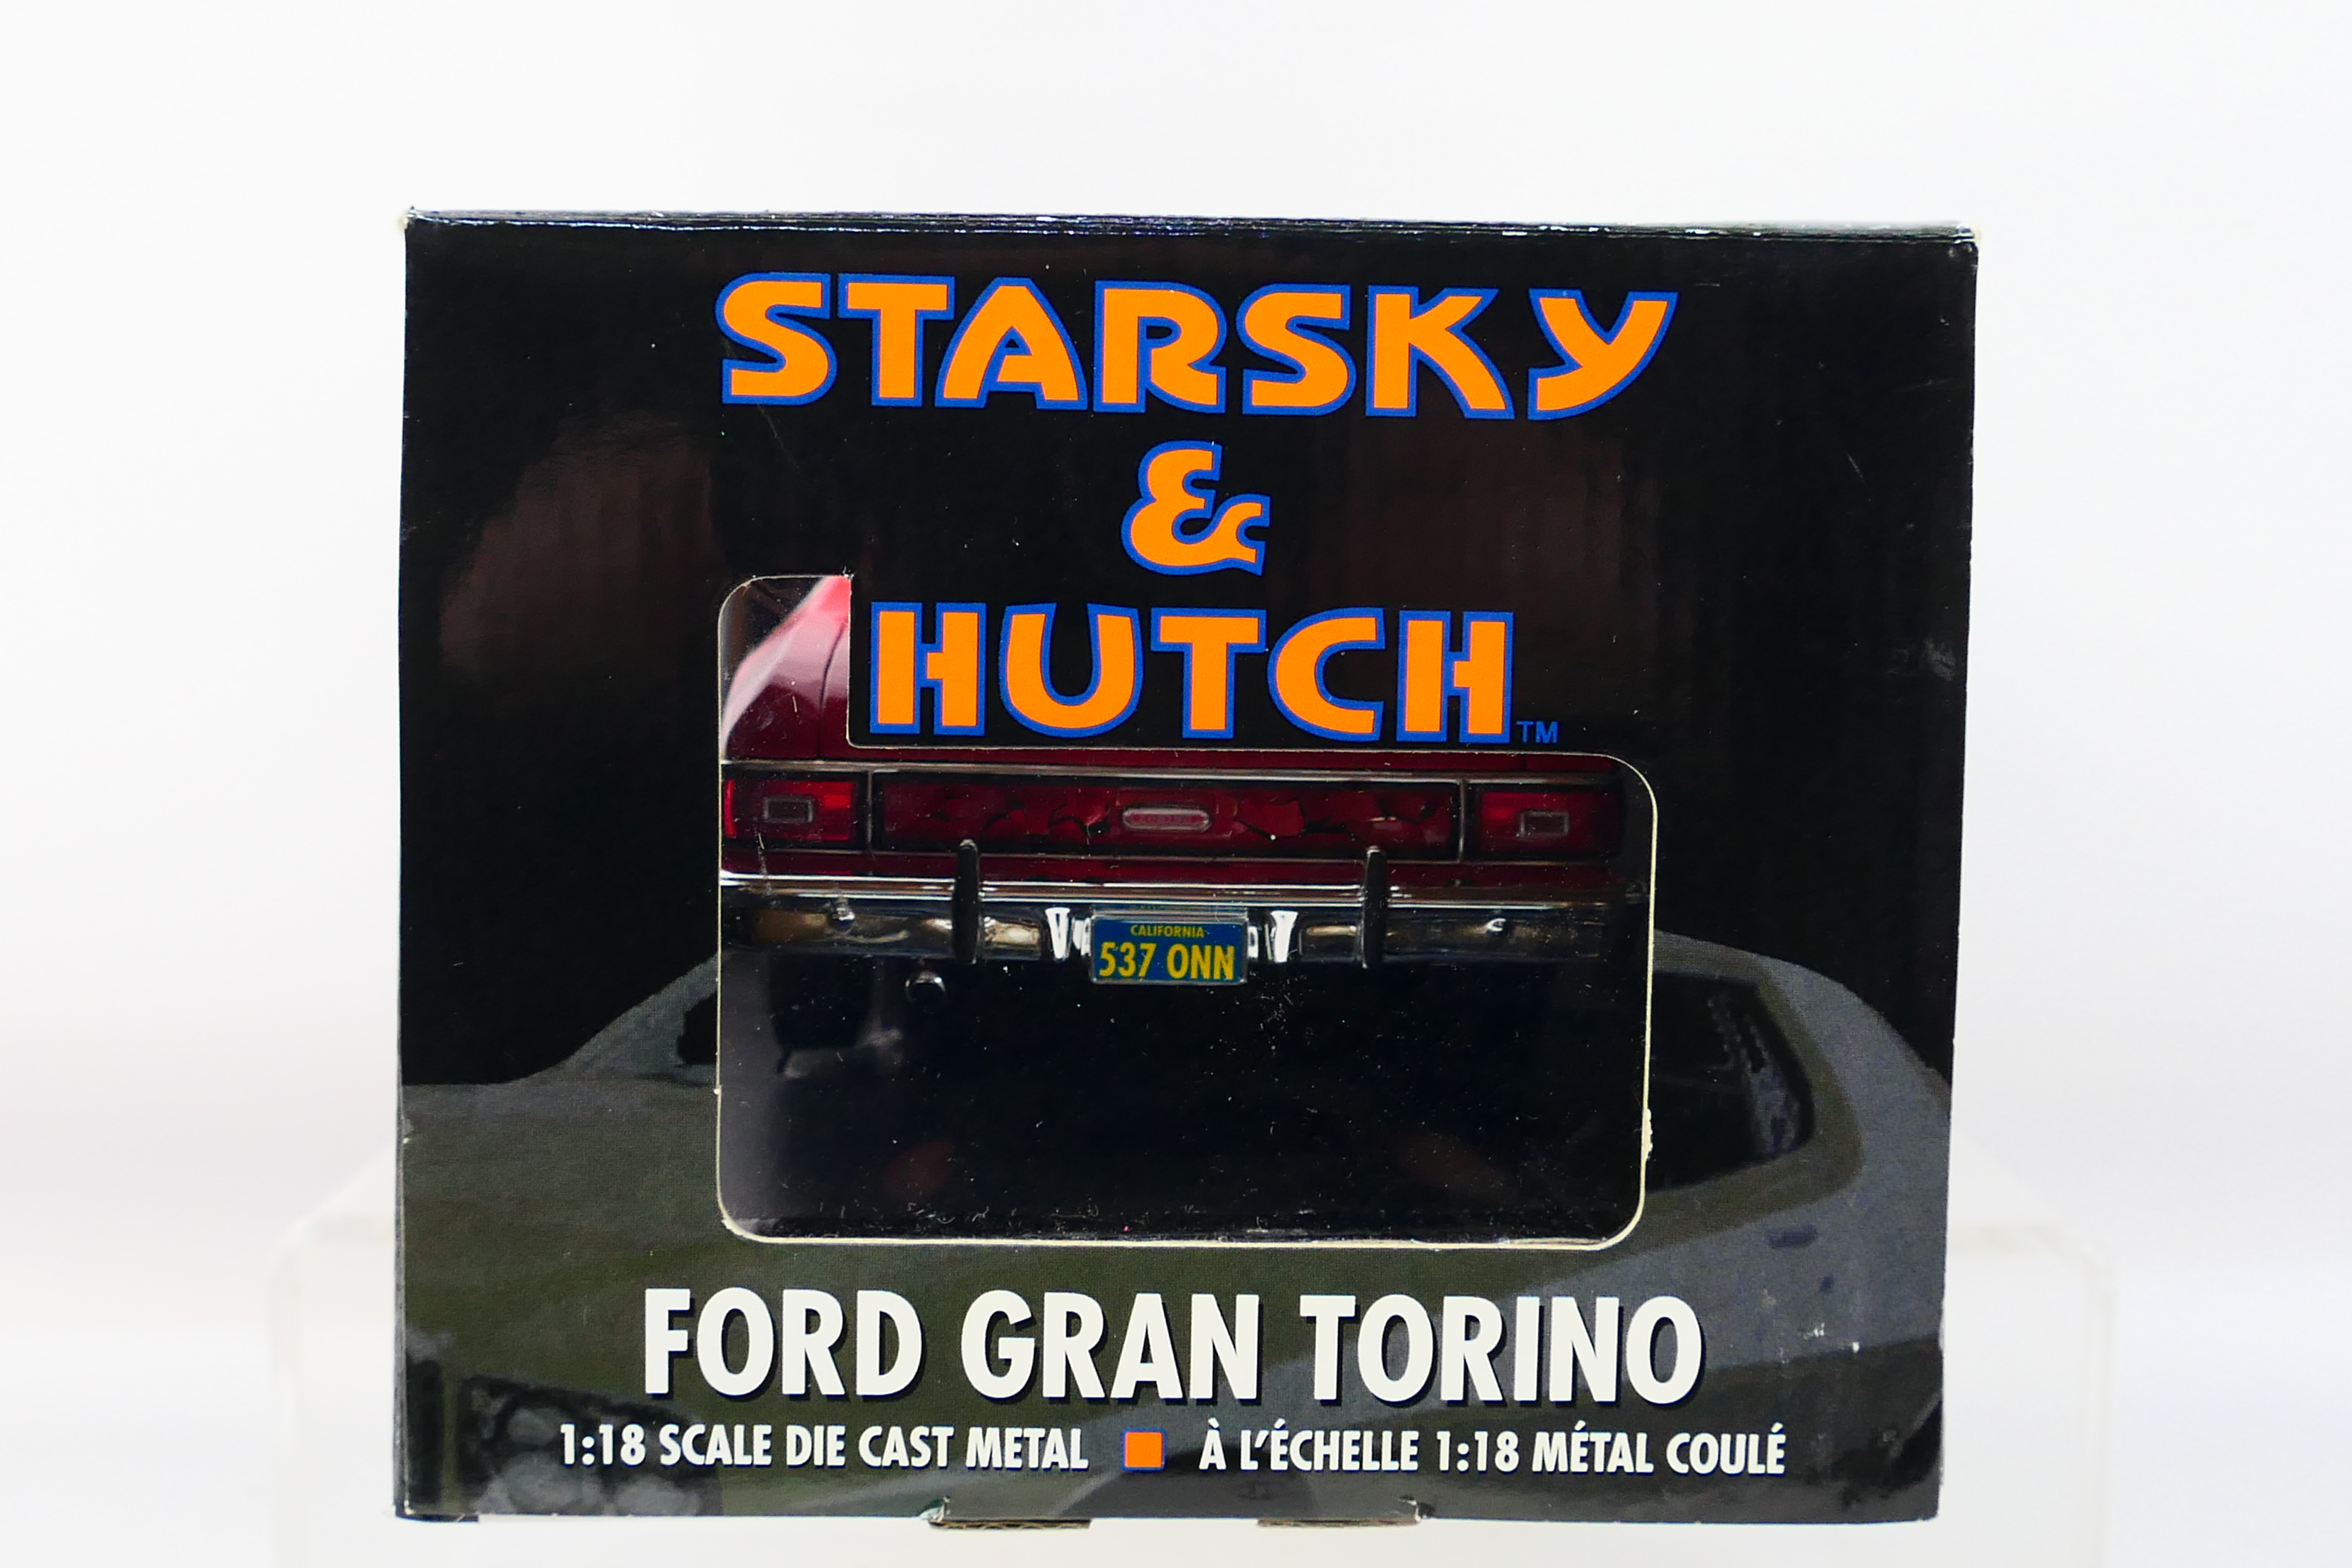 Joyride - A boxed Joyride #33151 1:18 scale 'Starsky & Hutch' Ford Gran Torino. - Image 4 of 5